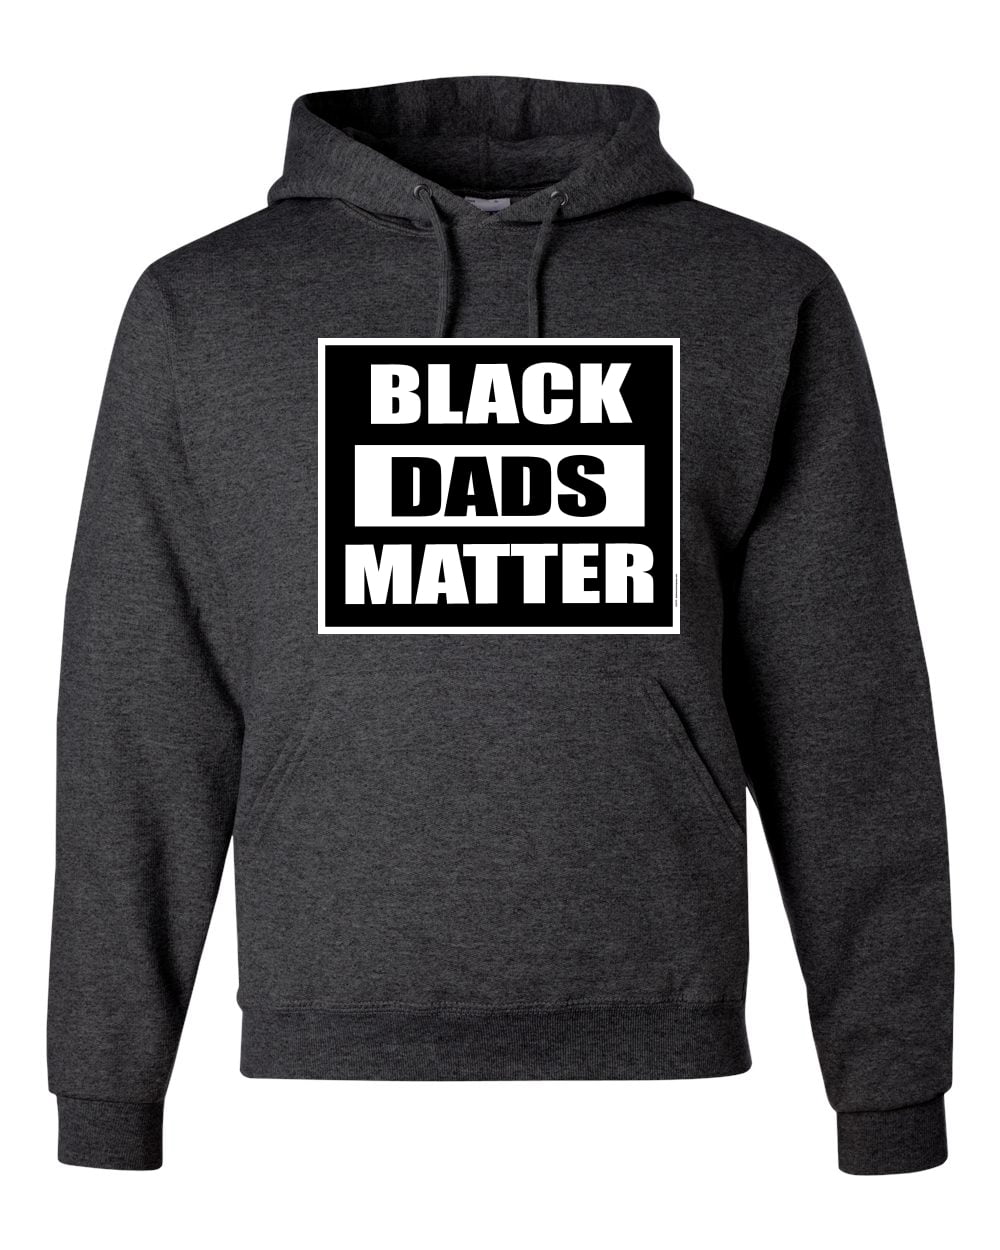 Black Lives Matter Baby Hoody-Plain-Printed-Black Lives Matter-Cotton Baby Hoody 